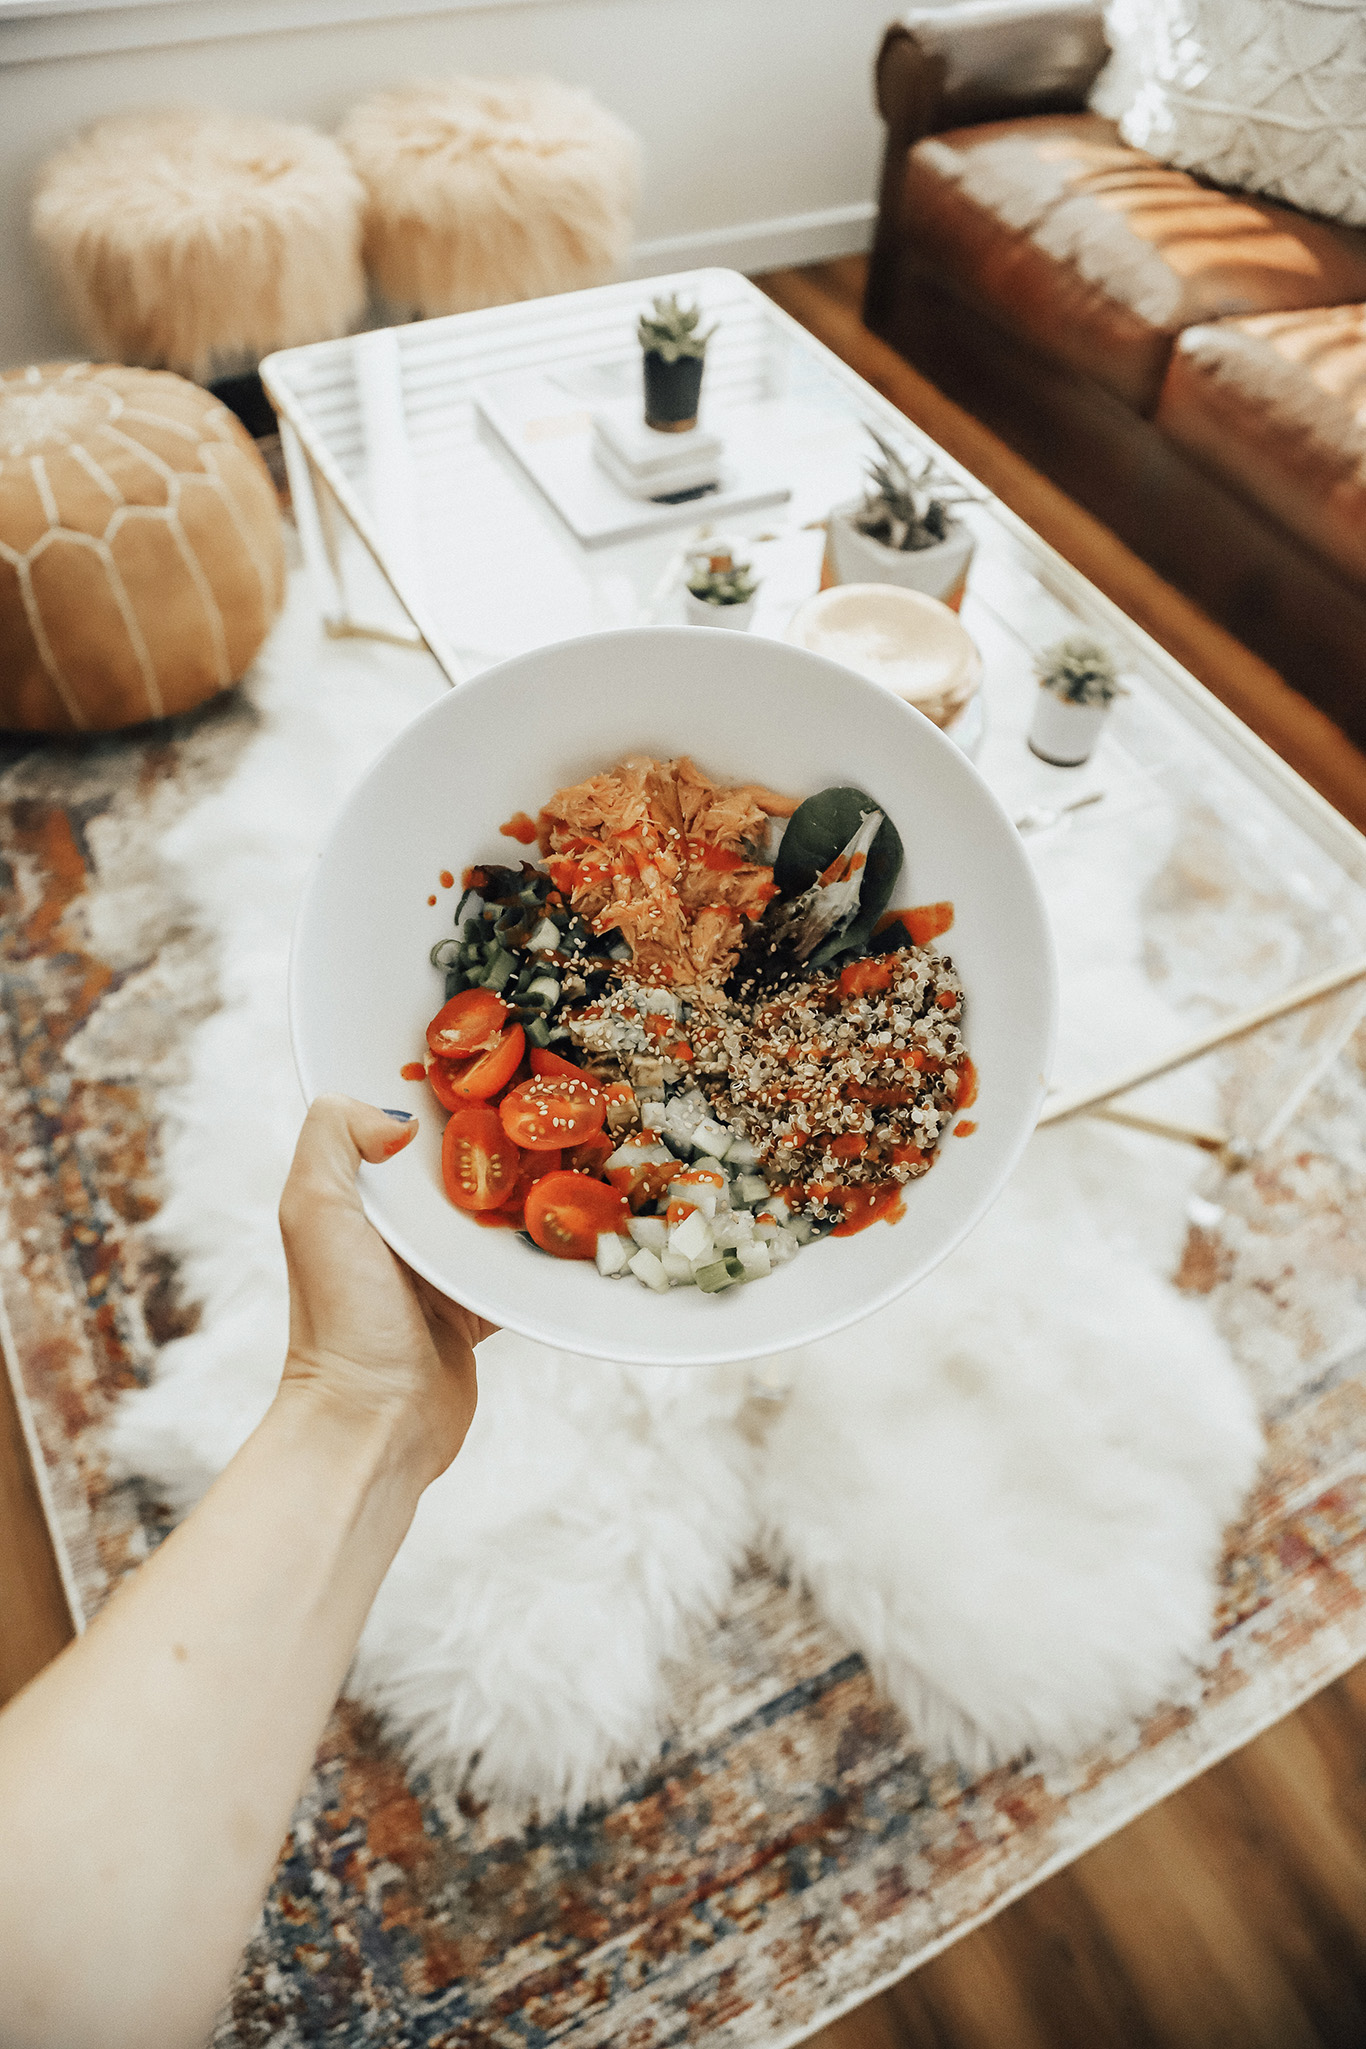 Alena Gidenko of modaprints.com shares her favorite healthy Paleo meals from home!